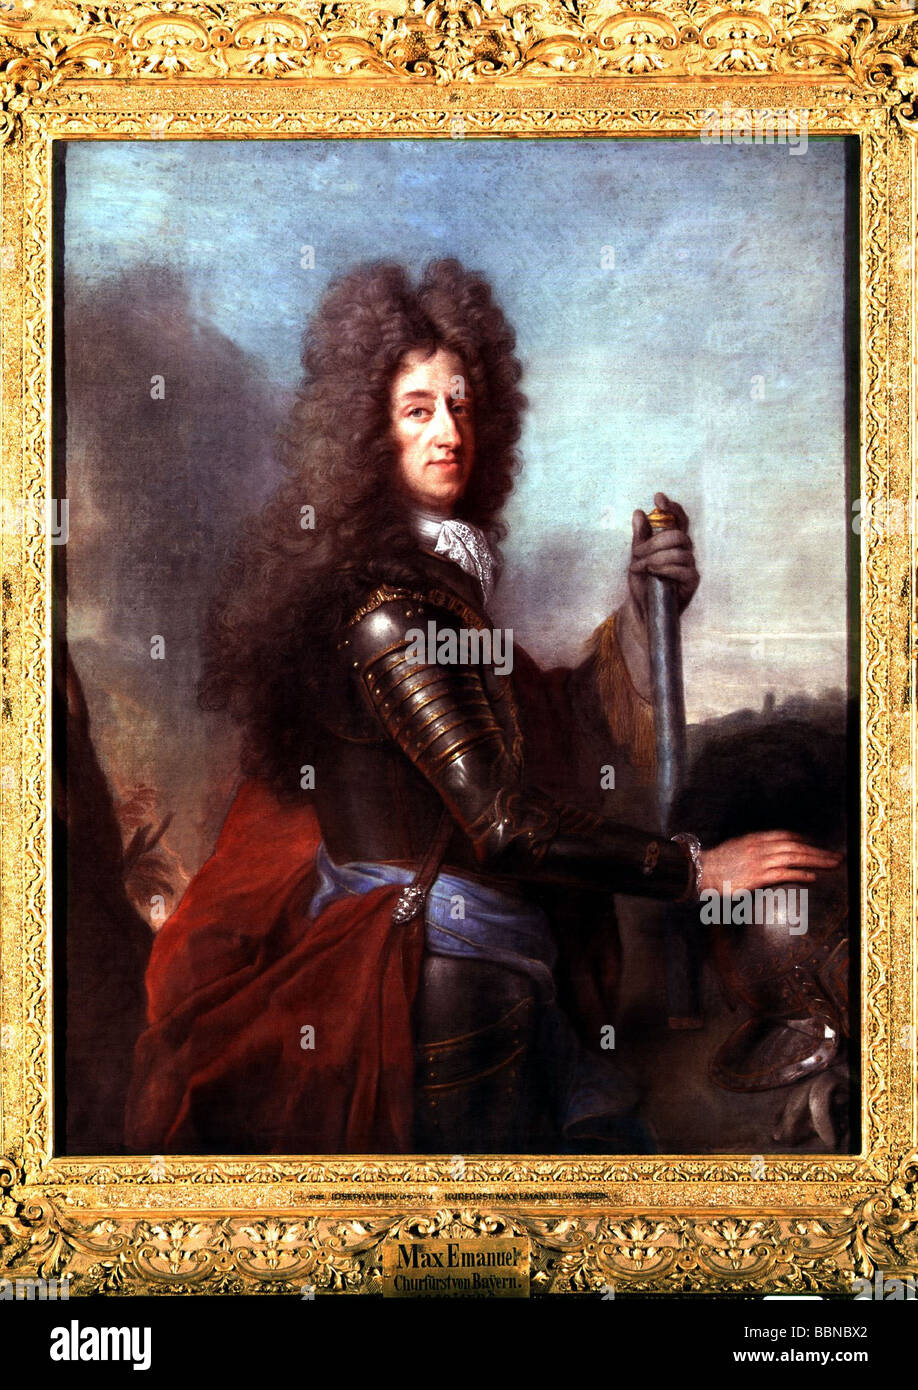 Maximiliano II Emanuel, 11.7.1662 - 26.2.1726, elector de Baviera 26.5.1679 - 26.2.1726, longitud media, pintura de Joseph Vivien (1657 - 1714), Castillo de Schleissheim, Foto de stock